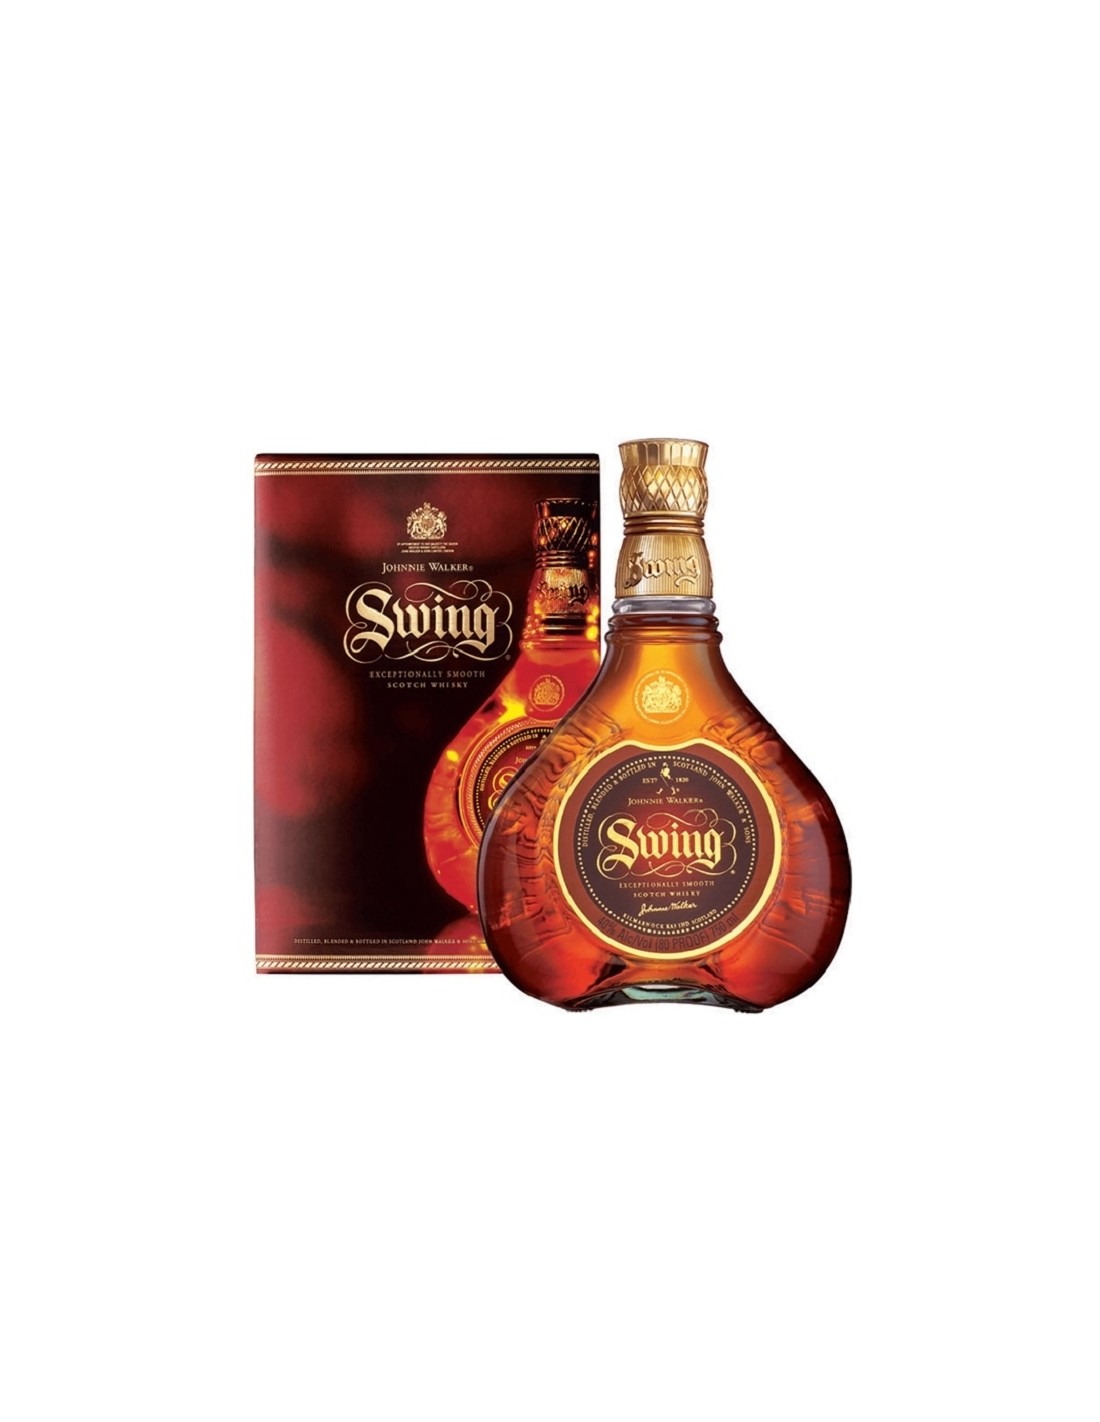 Whisky Johnnie Walker Swing 0.7L, 40% alc., Scotia alcooldiscount.ro